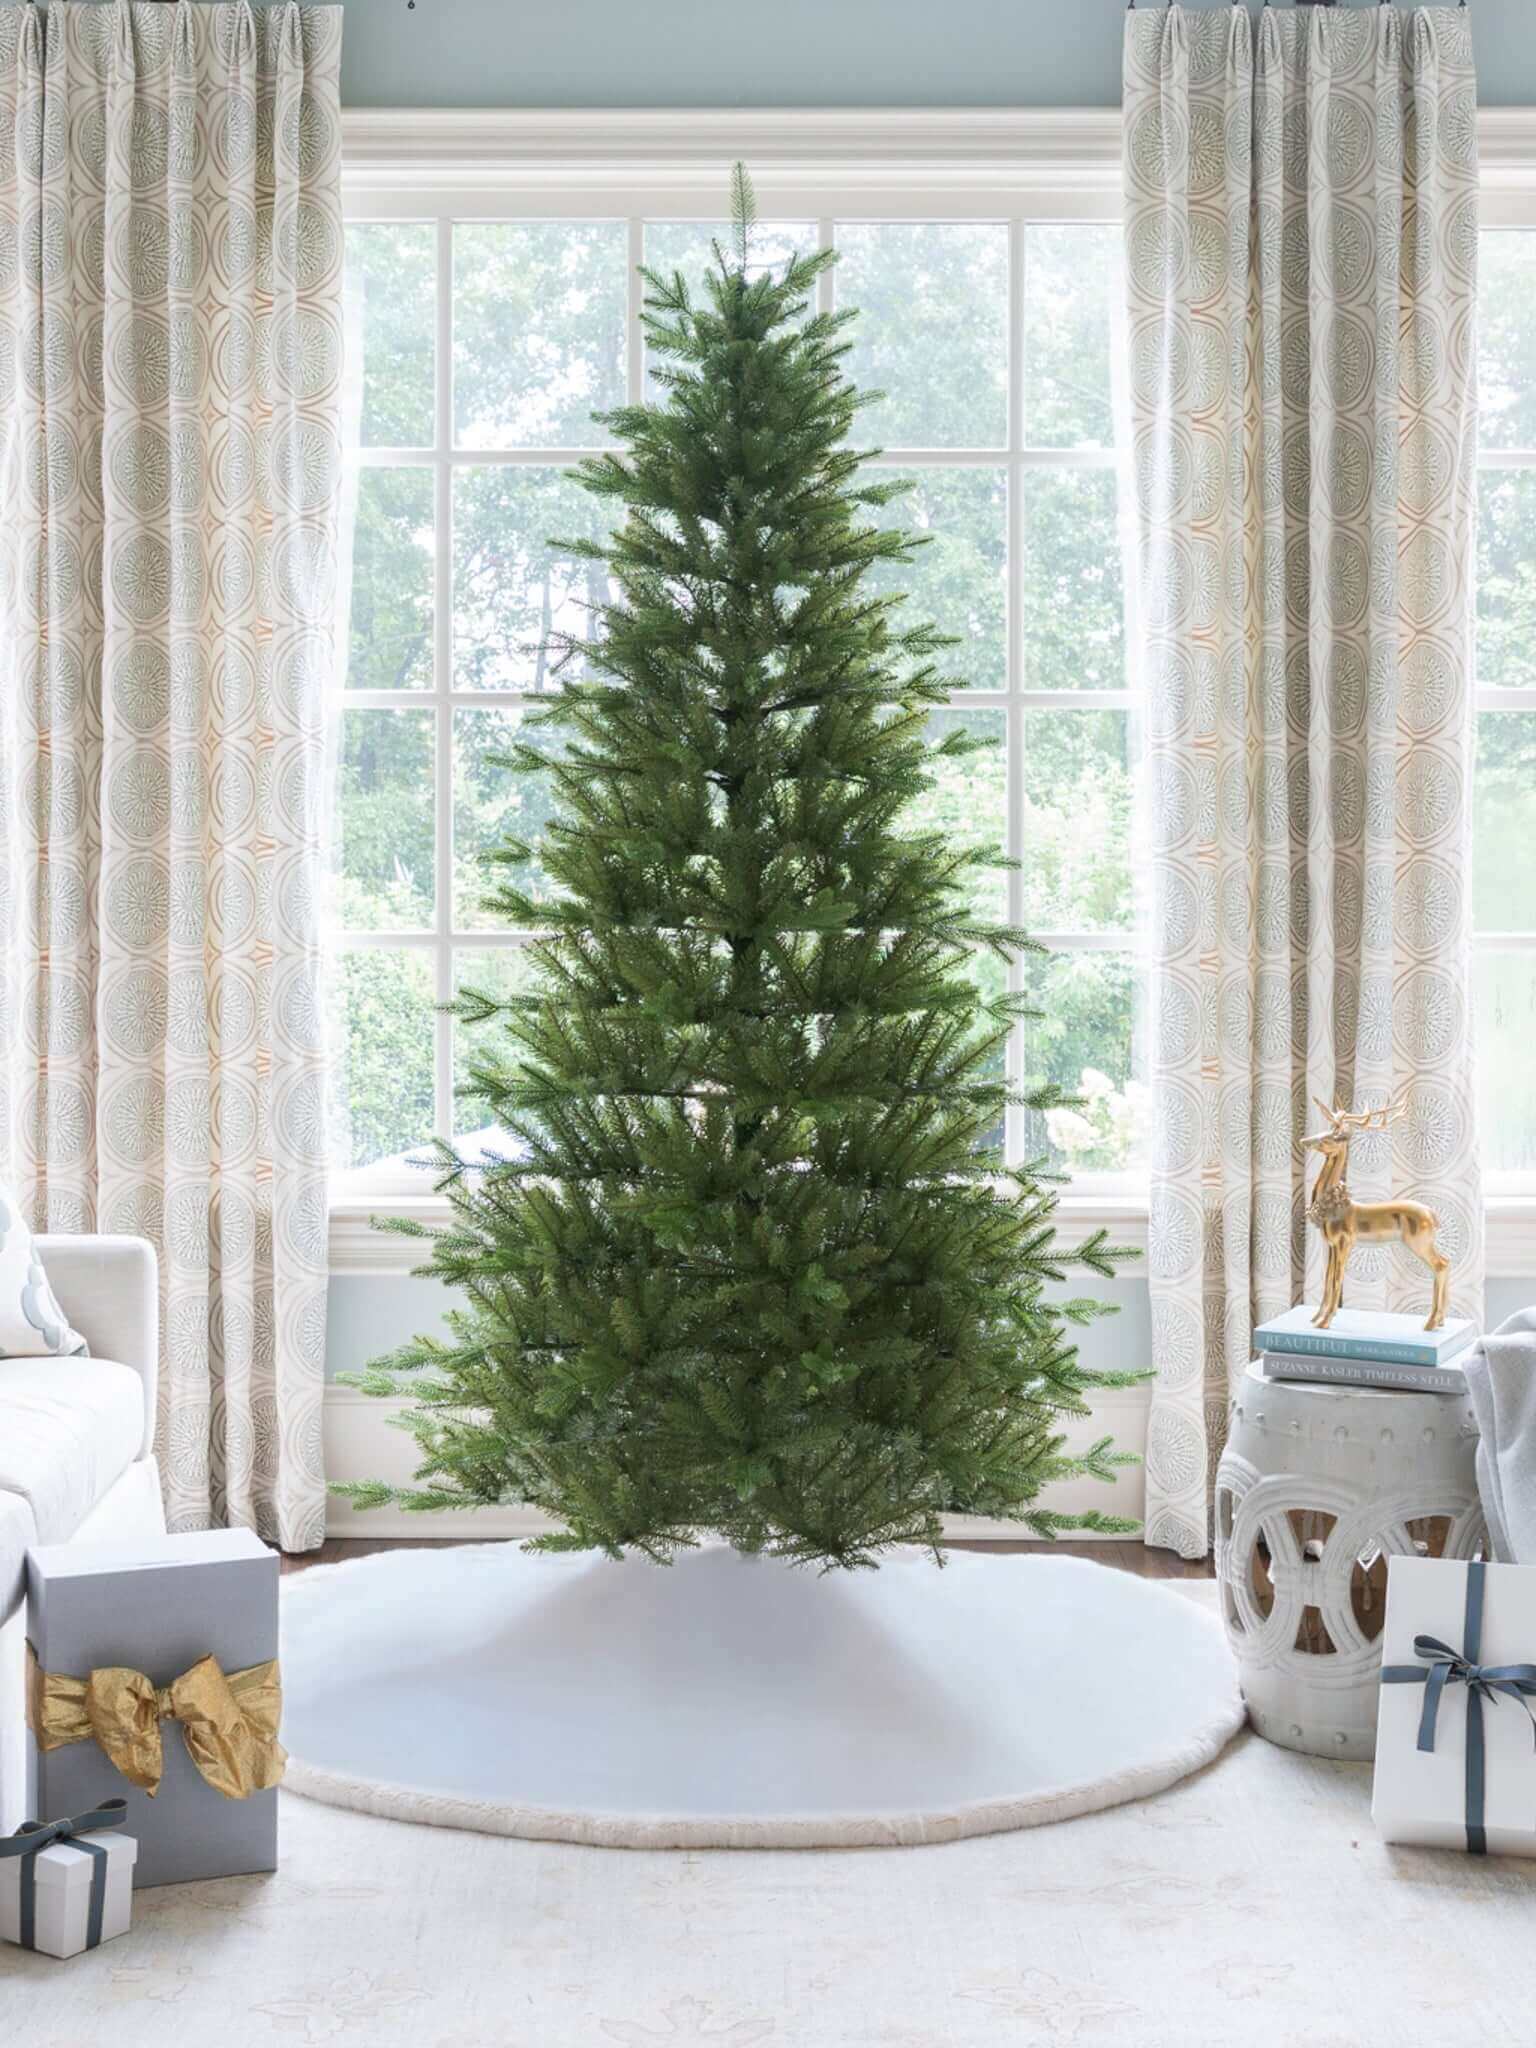 King of Christmas 7.5' Alpine Fir Slim Artificial Christmas Tree 650 Warm White Led Lights